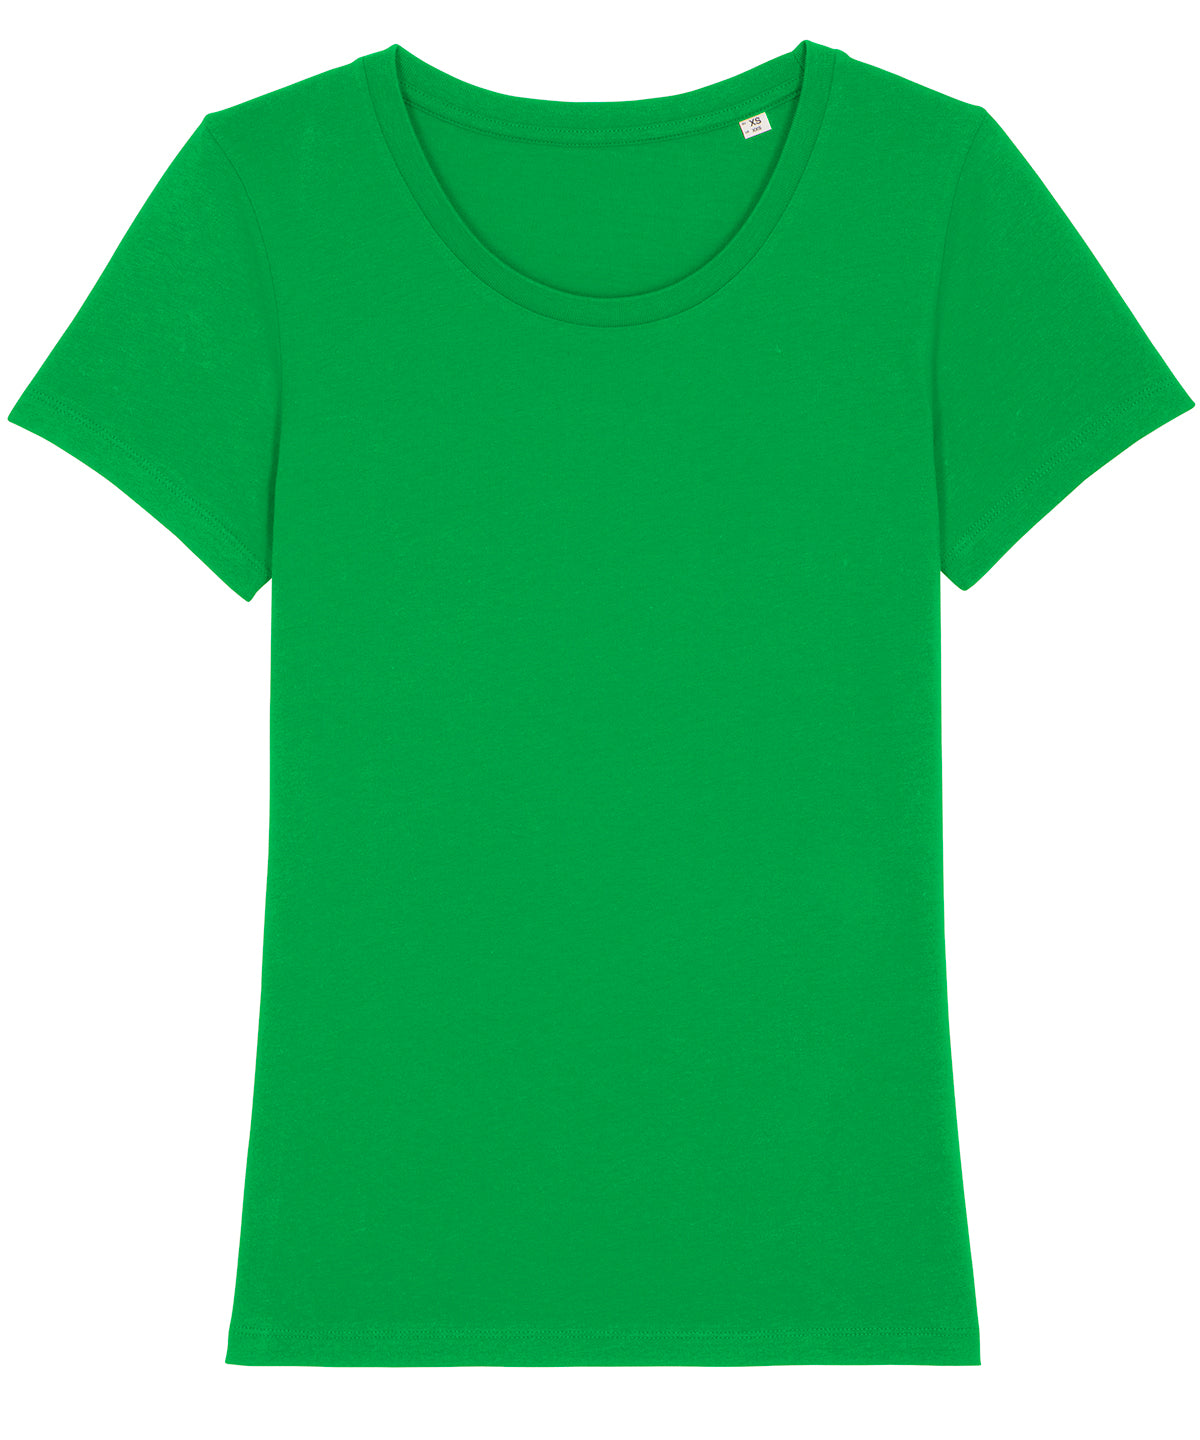 Stanley/Stella Womens Stella Expresser Iconic Fitted T-Shirt  Fresh Green